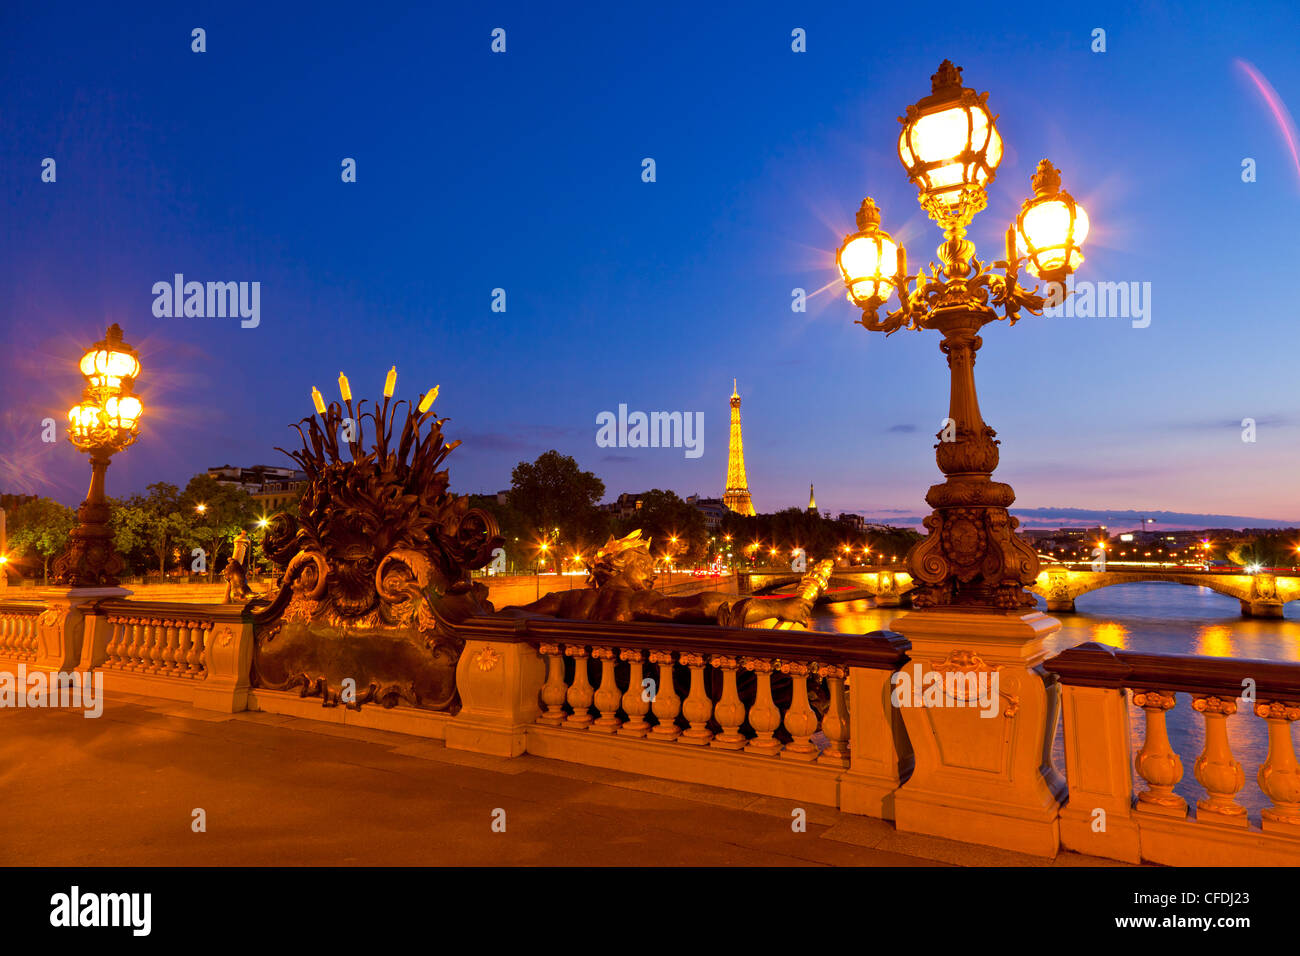 Eiffel Tower as seen from the Pont Alexandre III (Alexander III Bridge) at night, Paris, France, Europe Stock Photo